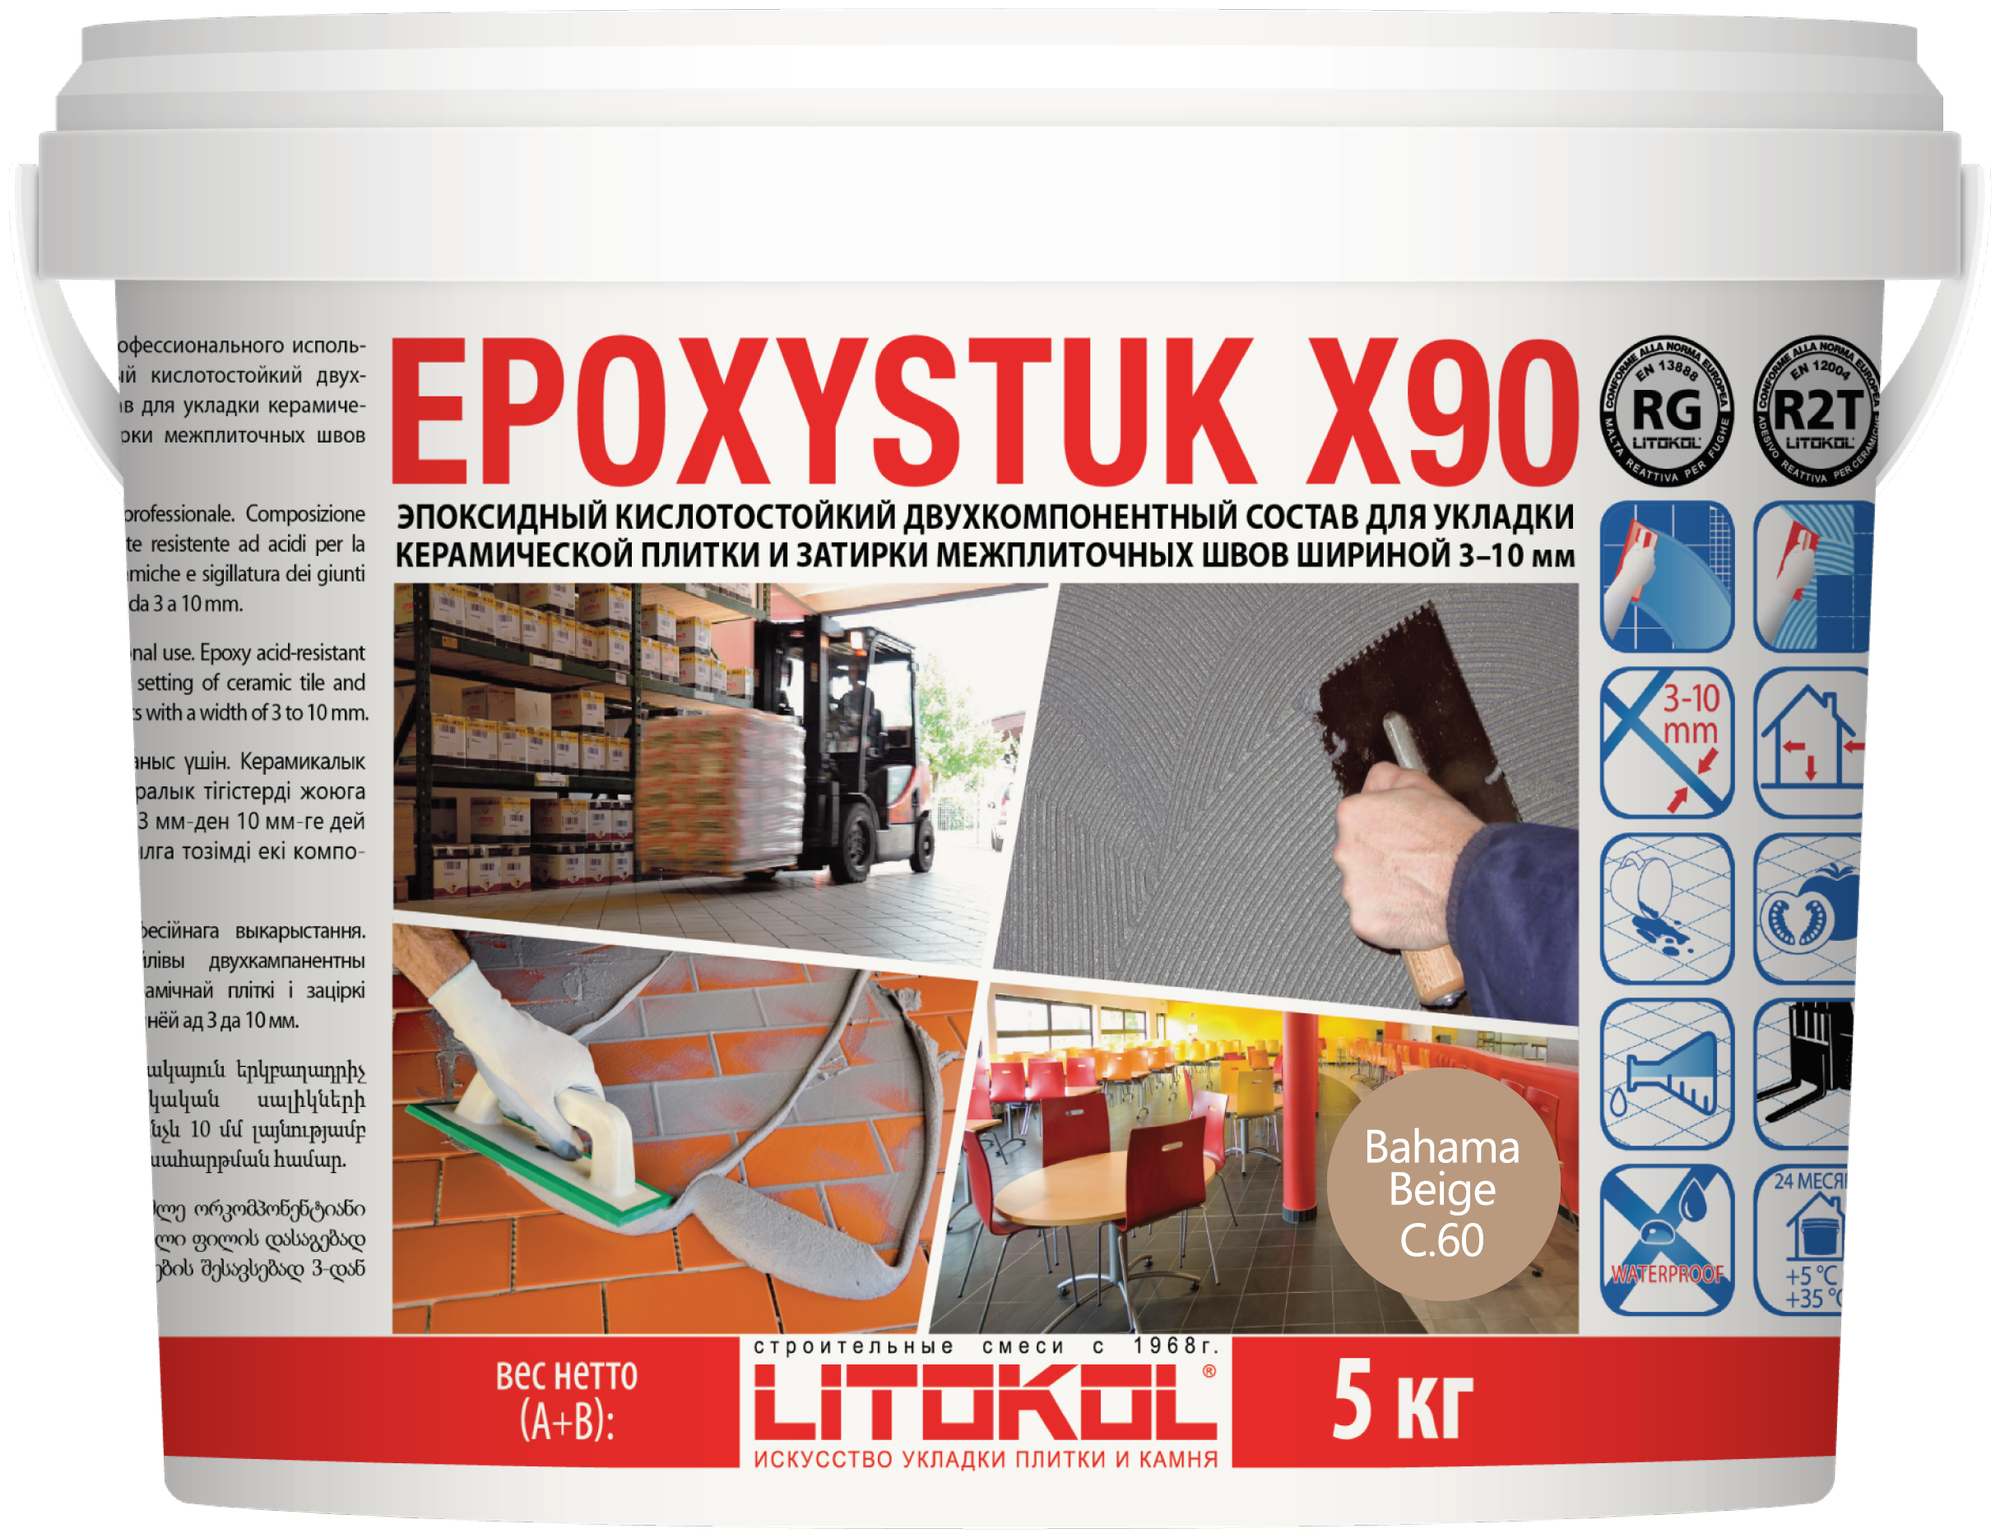 Затирка для плитки EPOXYSTUK X90 С.60 Bahama Beige, 5 кг - фотография № 3